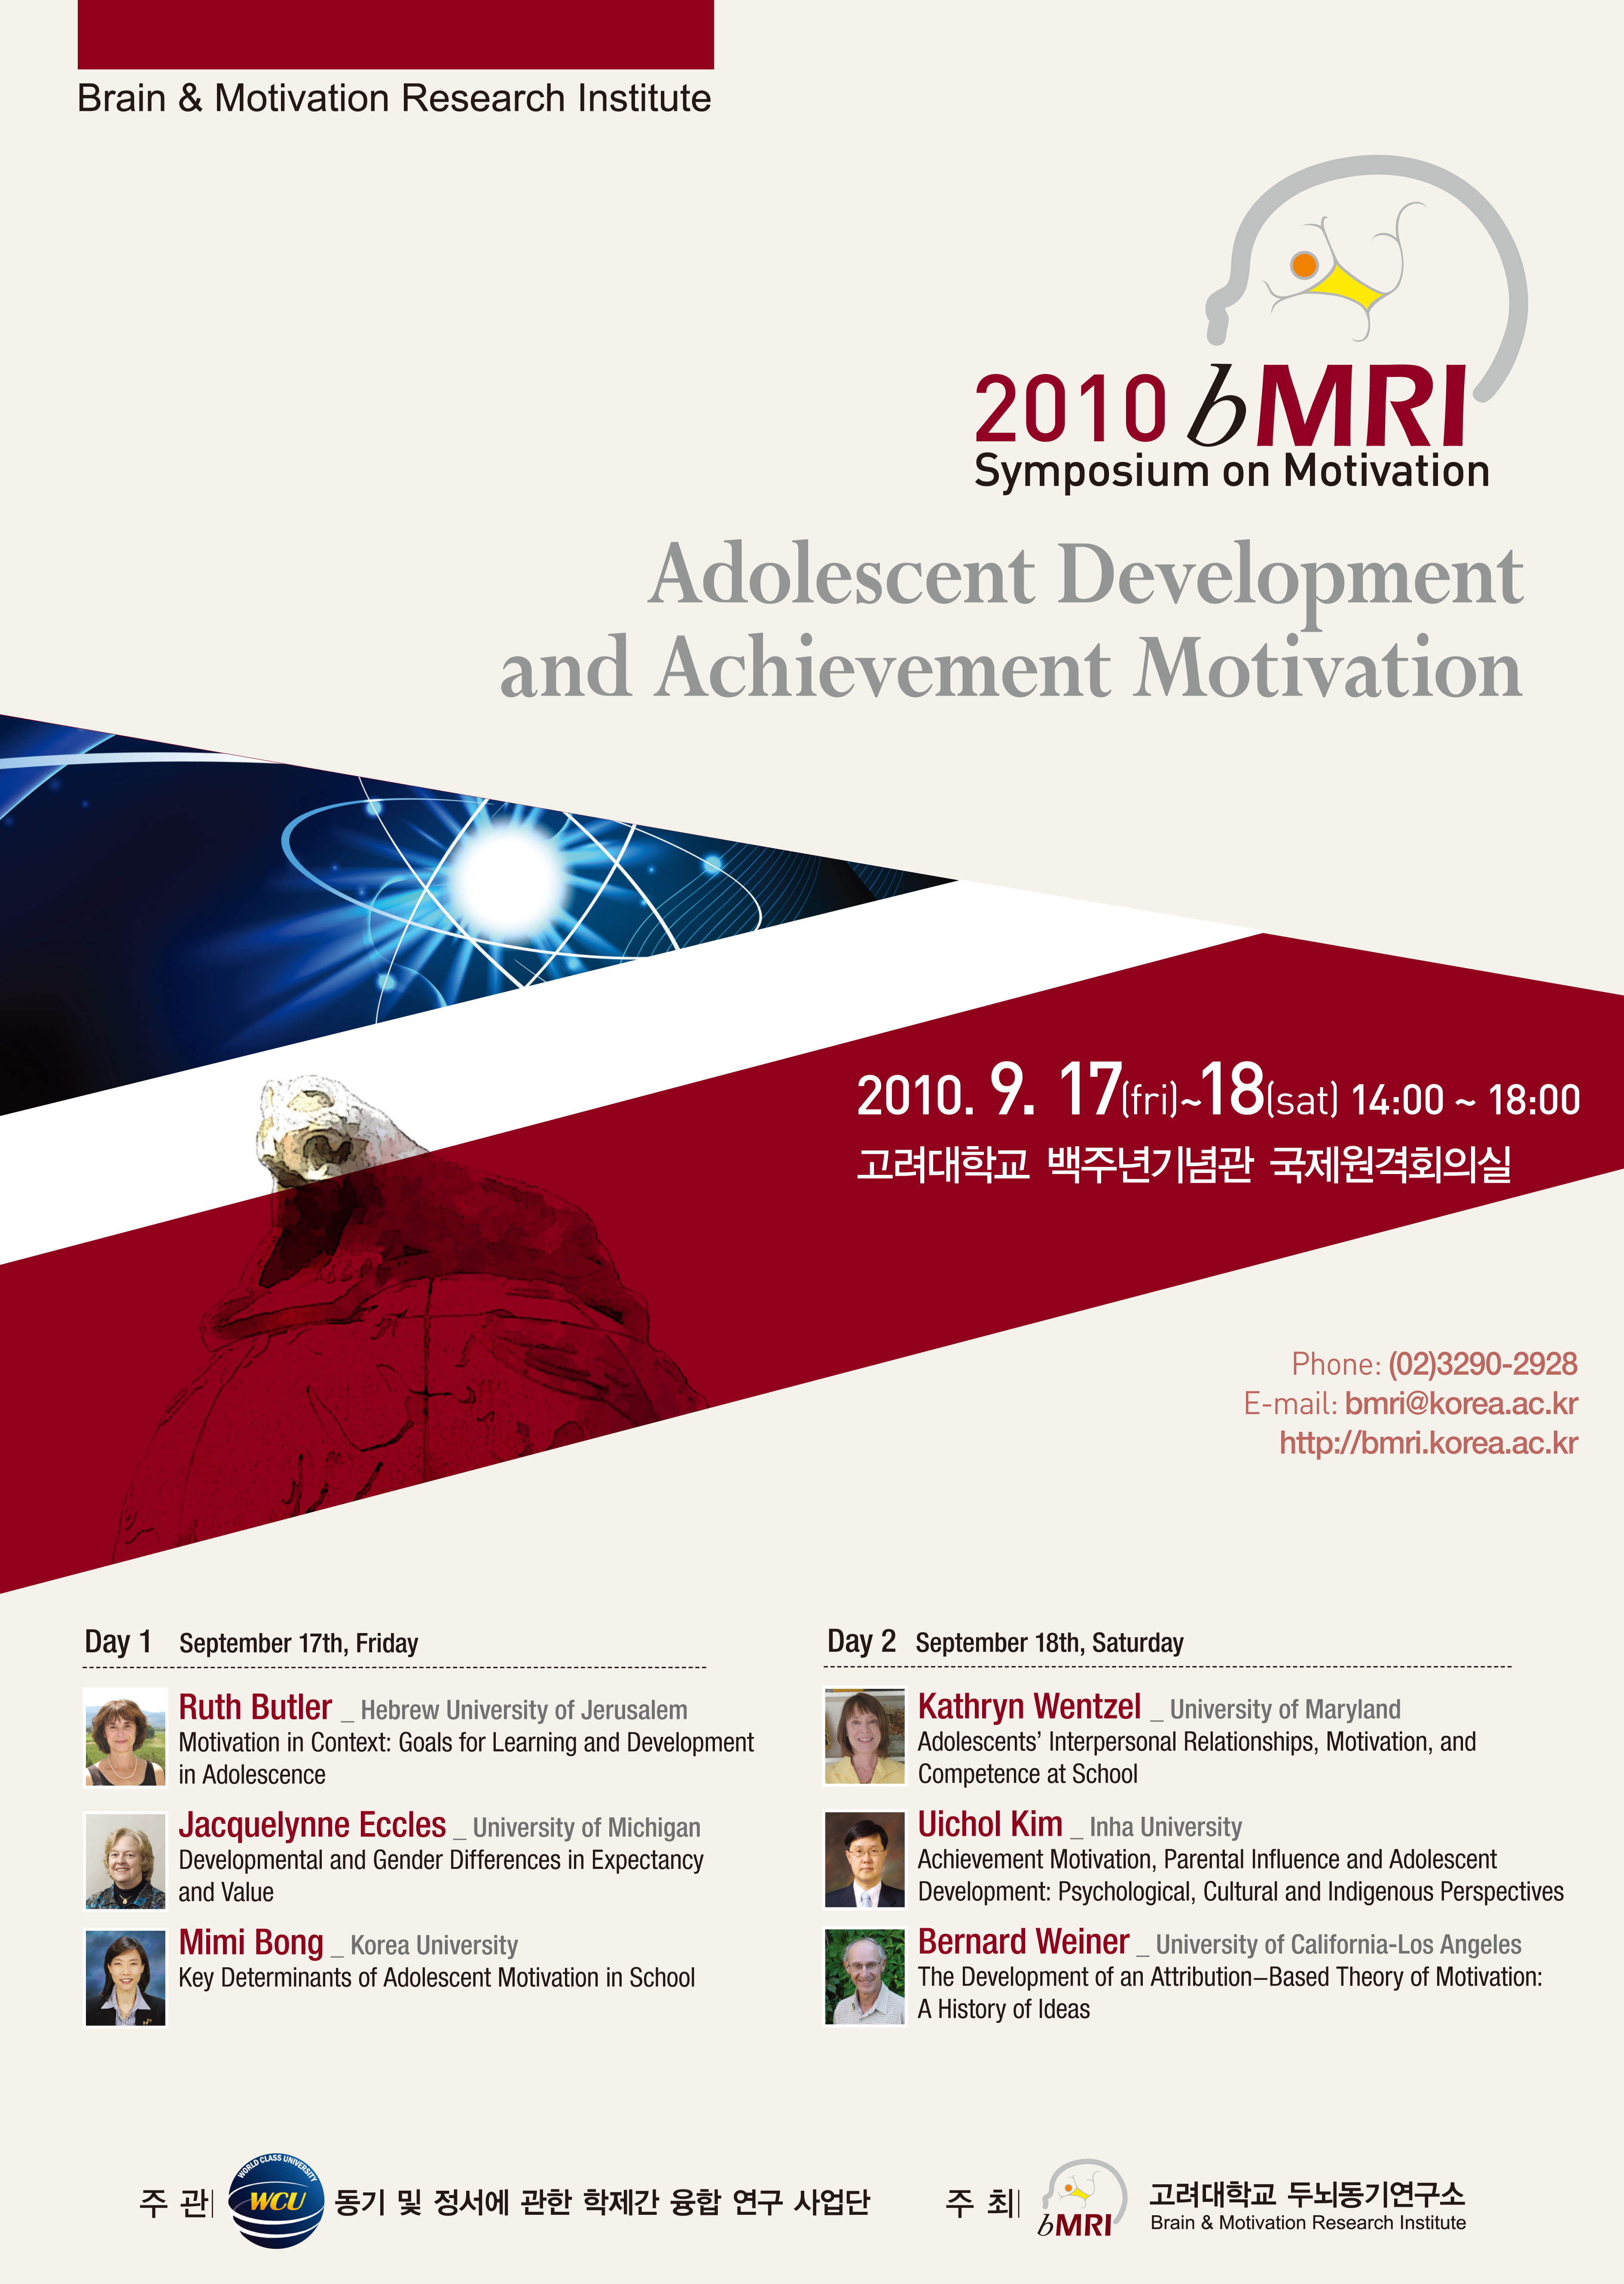 2010 bMRI Symposium on Motivation Day 1 #1